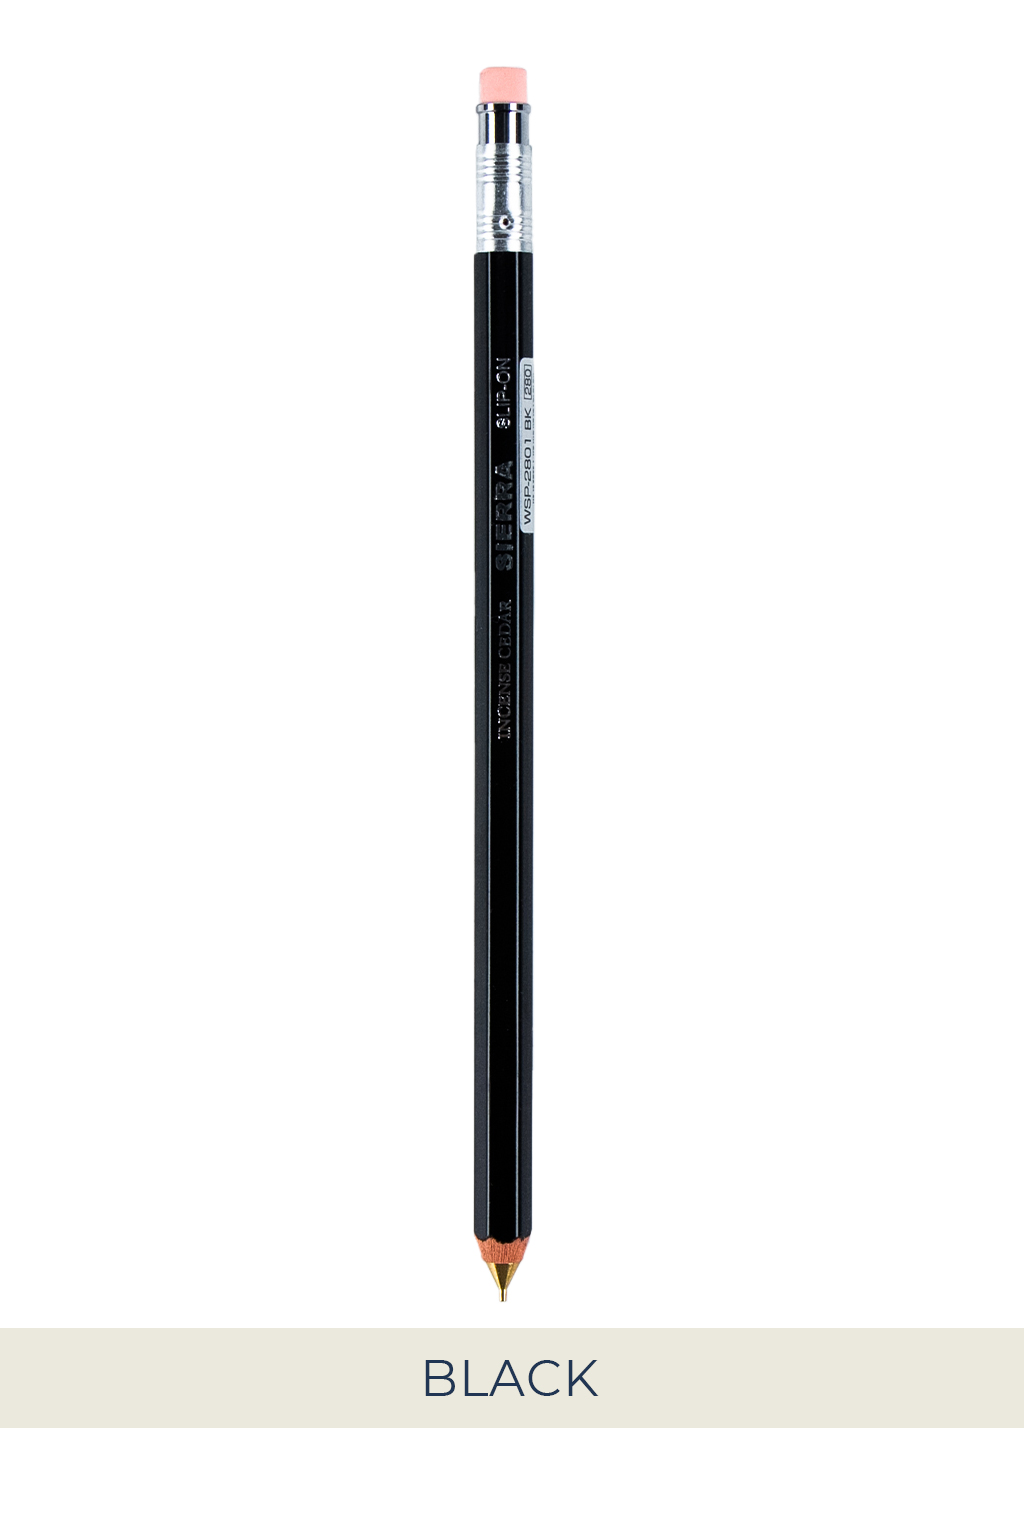 Slip-on Sierra Wooden Mechanical Pencil